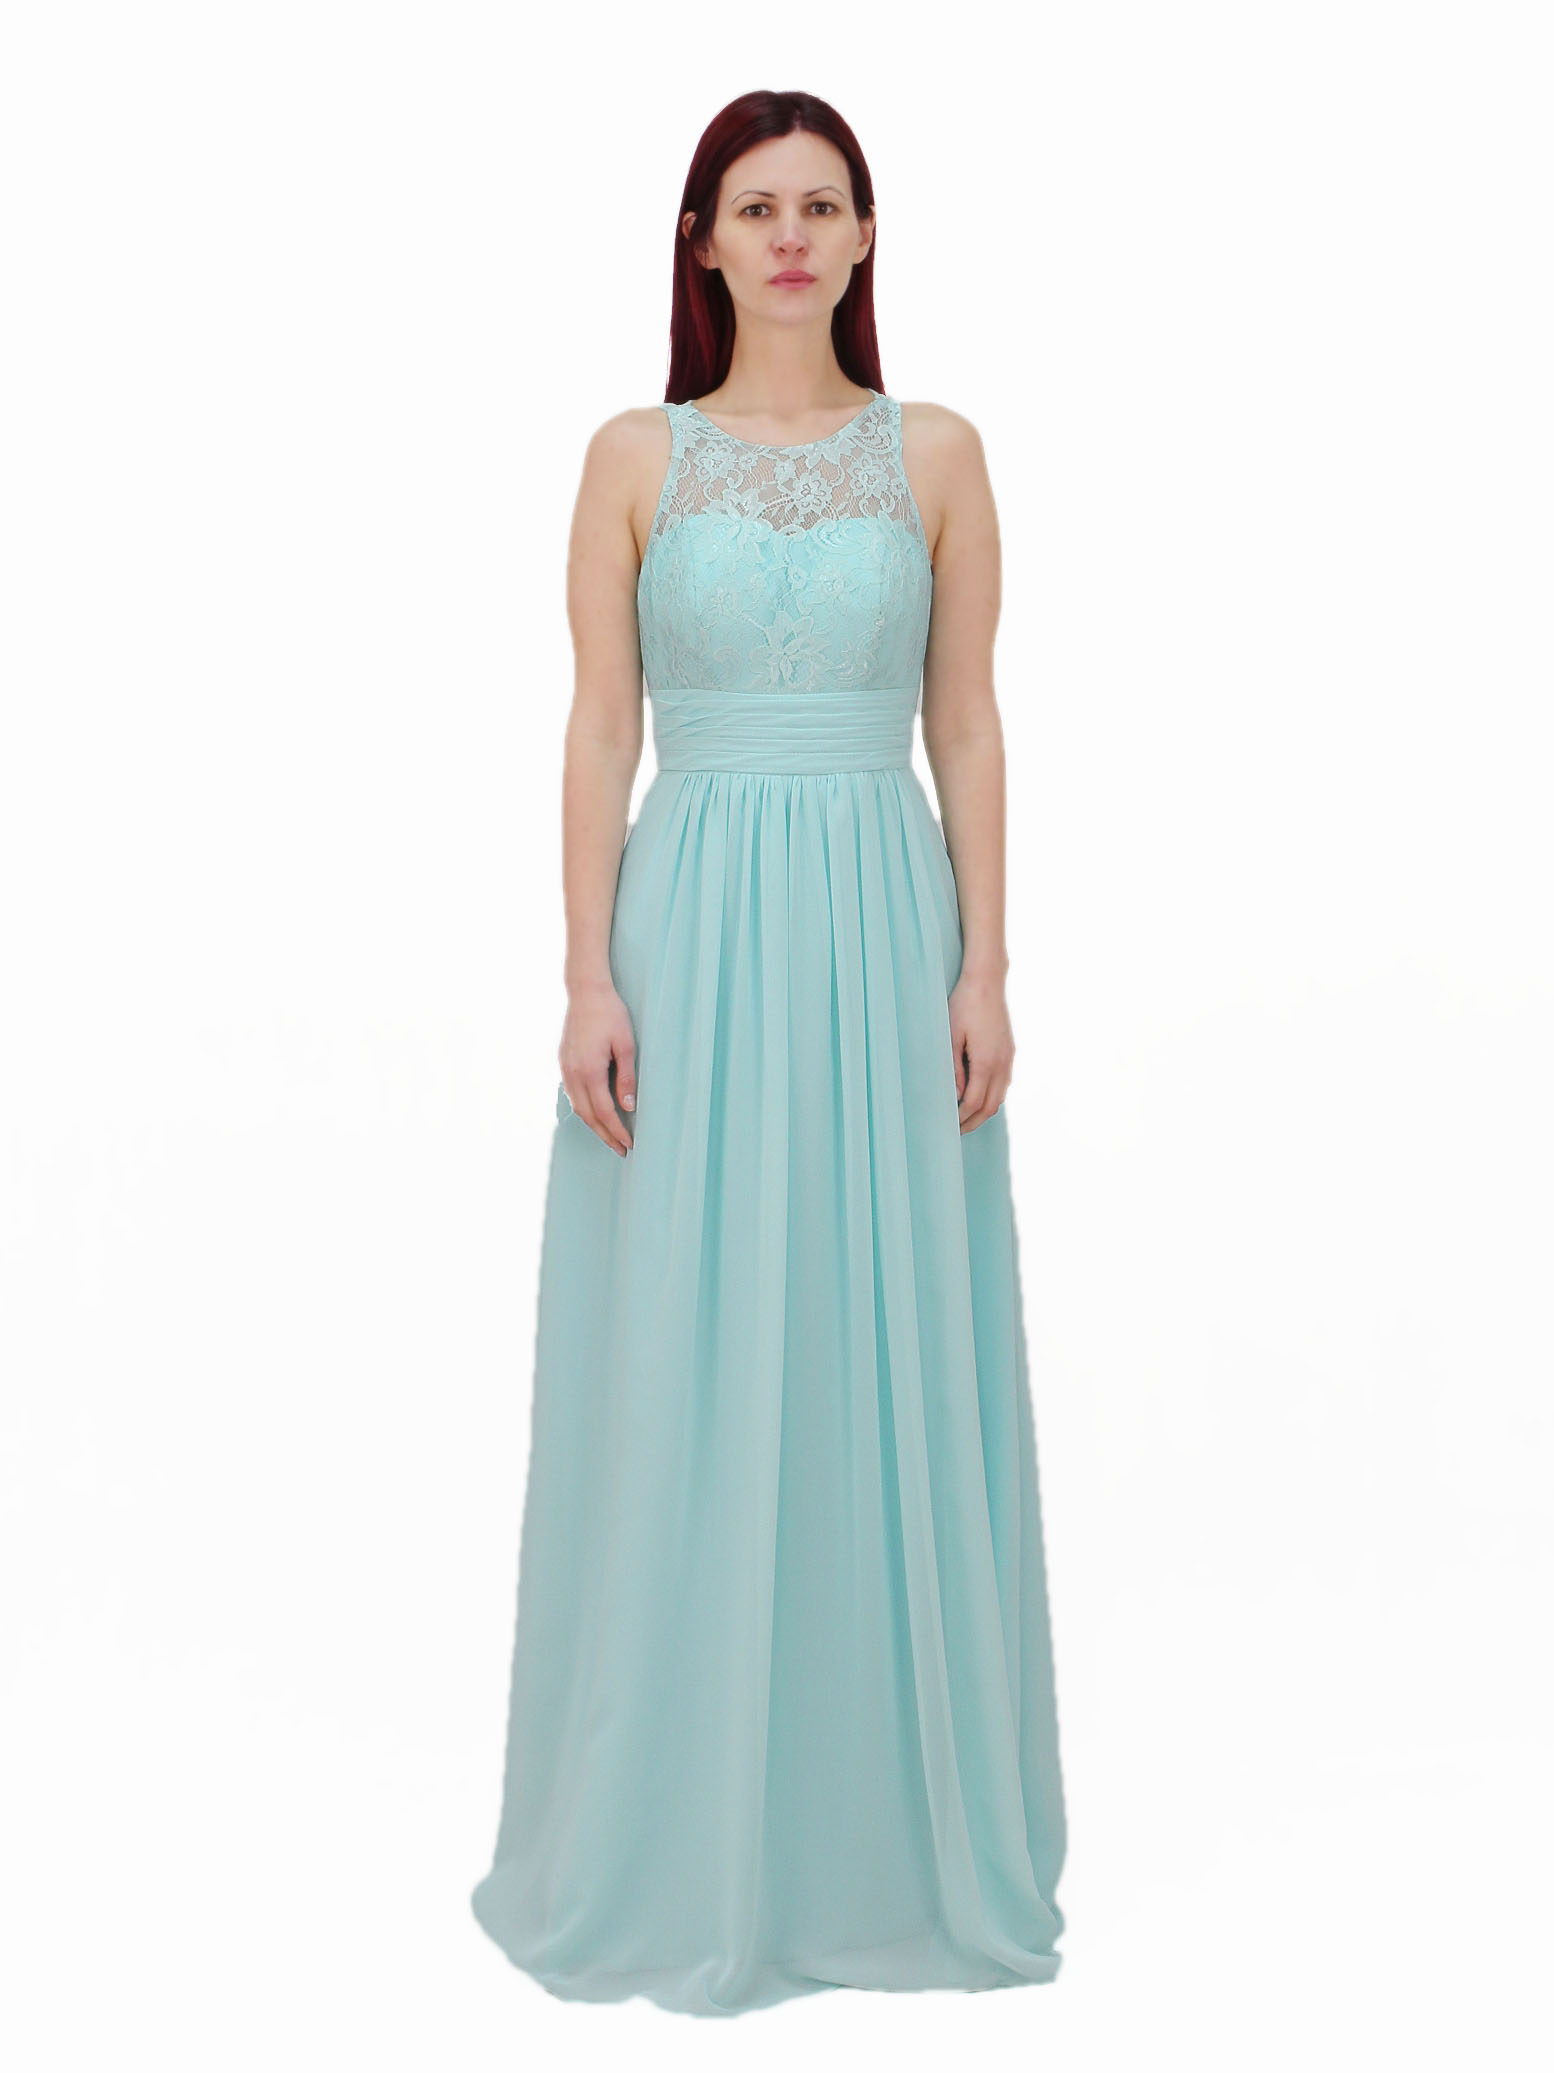 Mint Lace Chiffon Bridesmaid Dress - Click Image to Close